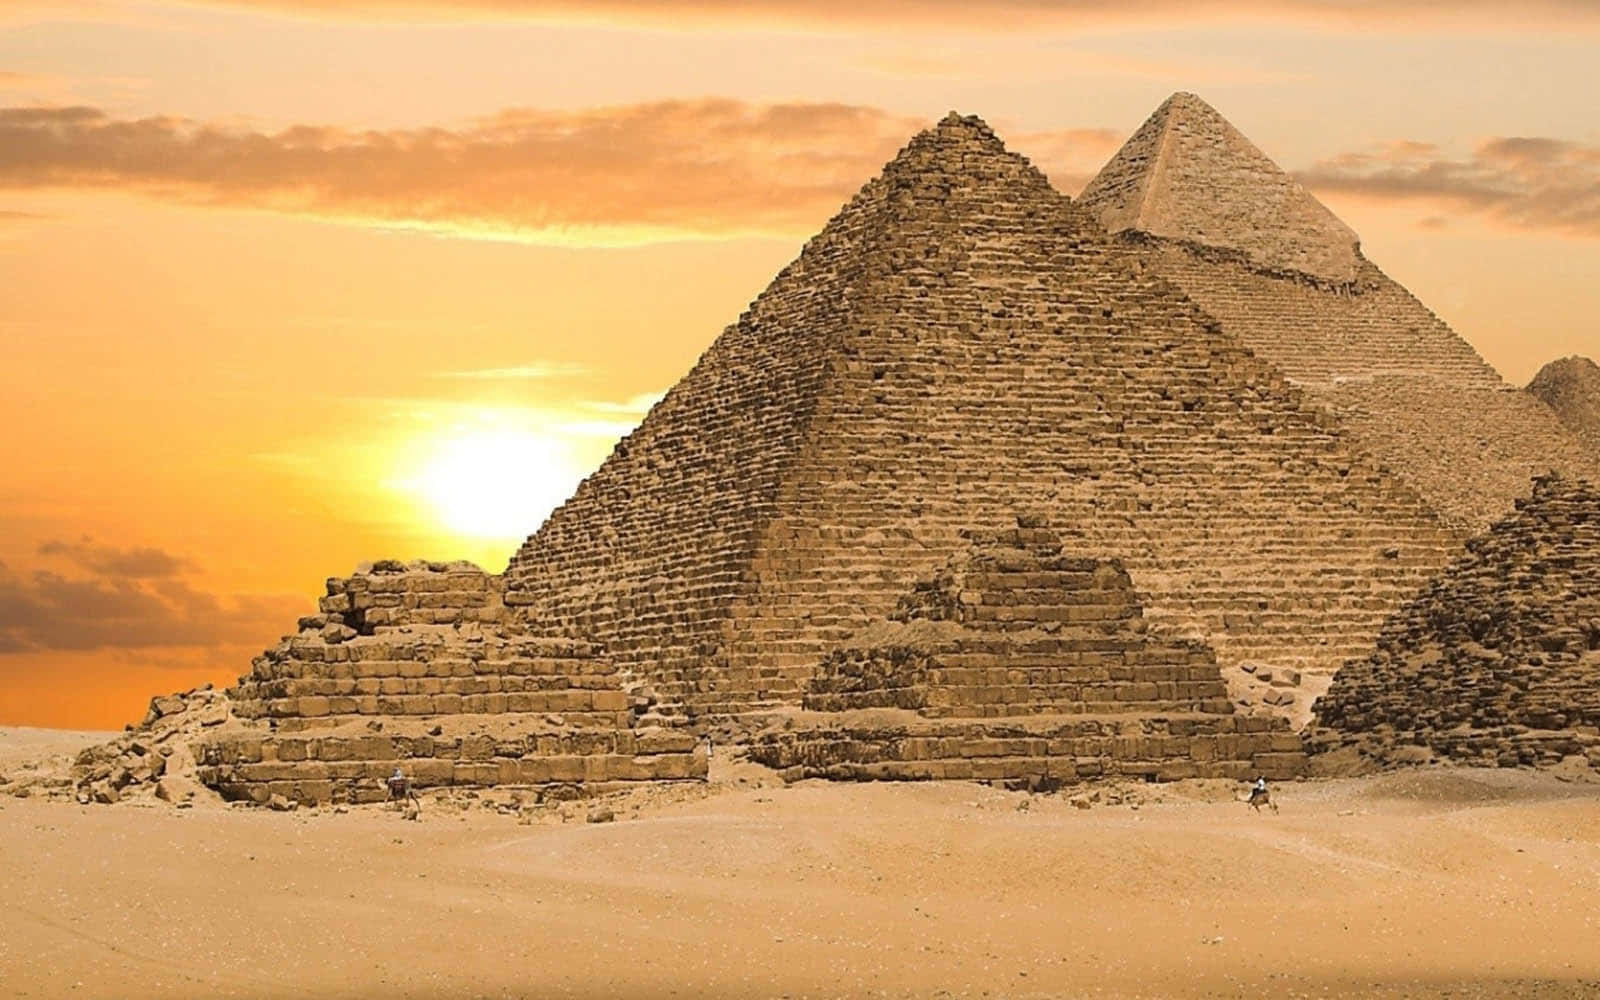 The Pyramids Of Giza At Sunset